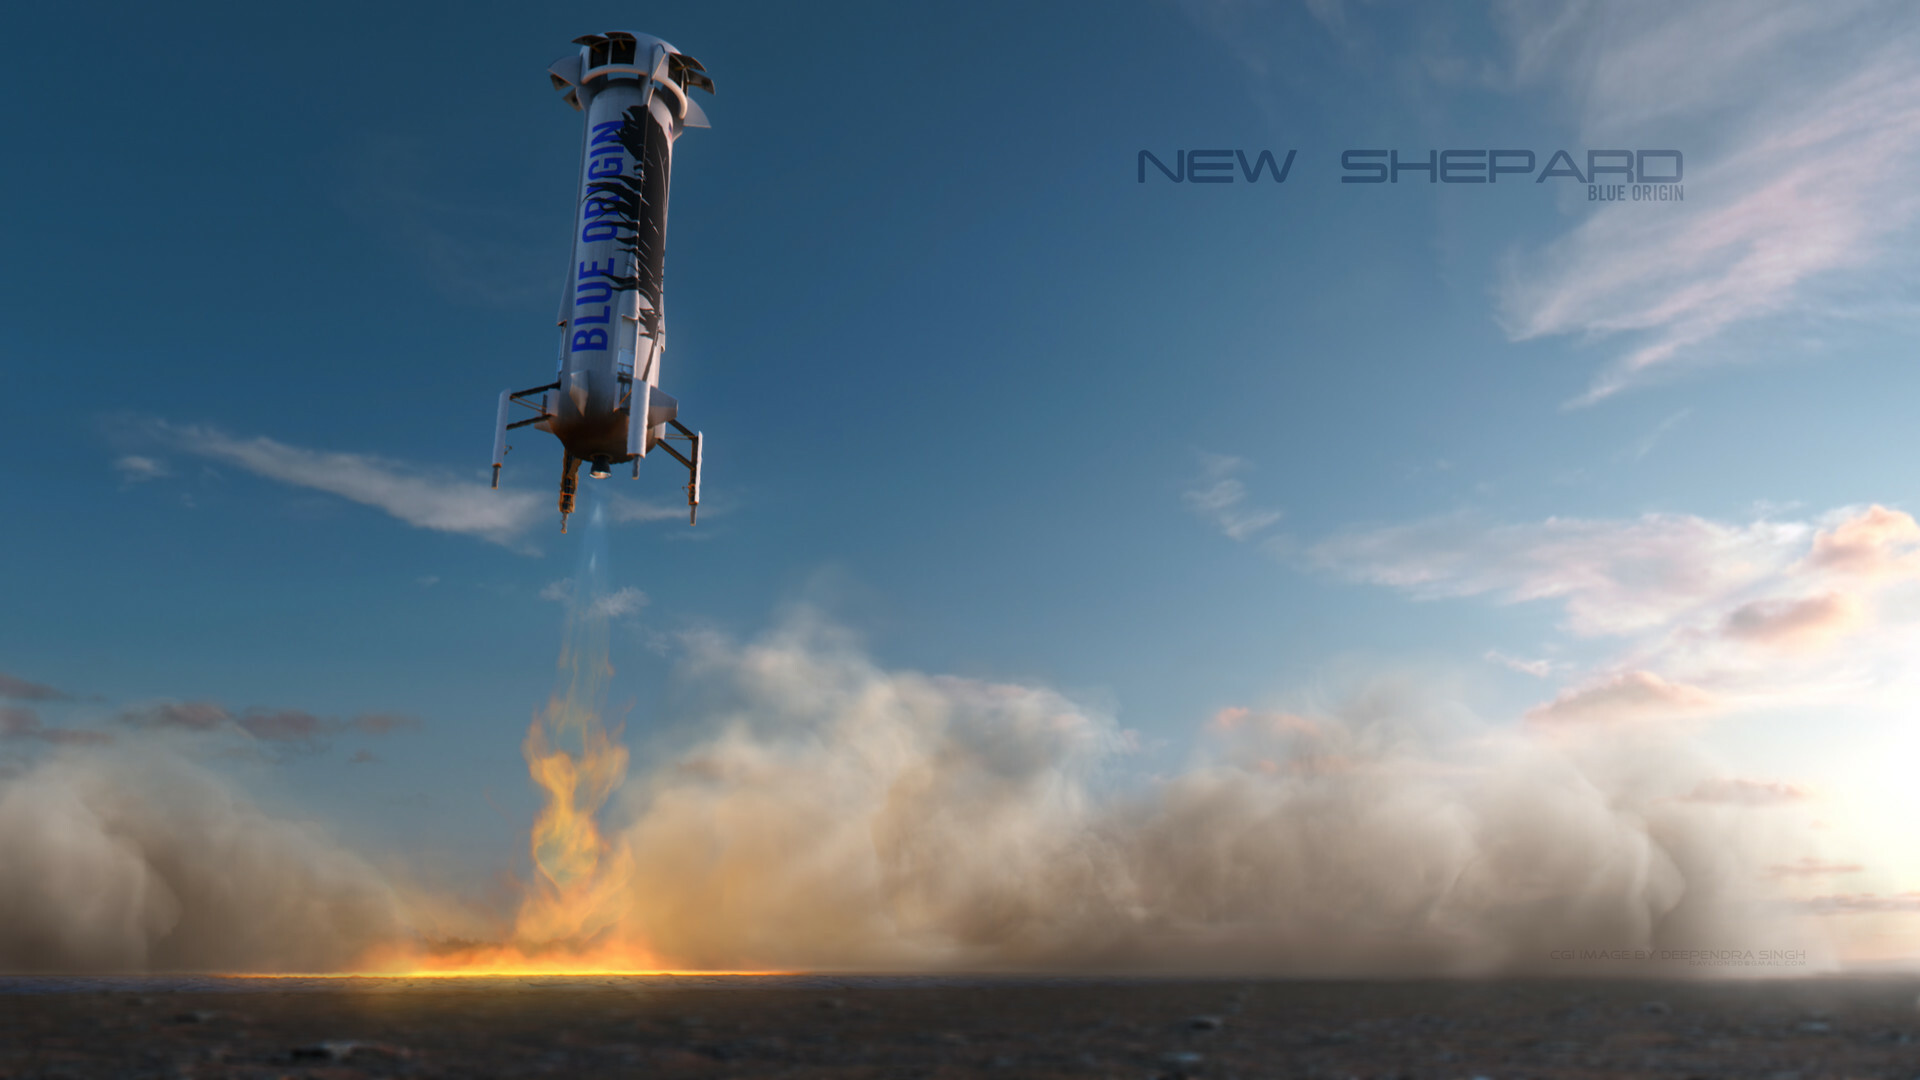 Blue Origin, New Shepard artwork, Astronomical inspiration, Space innovation, 1920x1080 Full HD Desktop